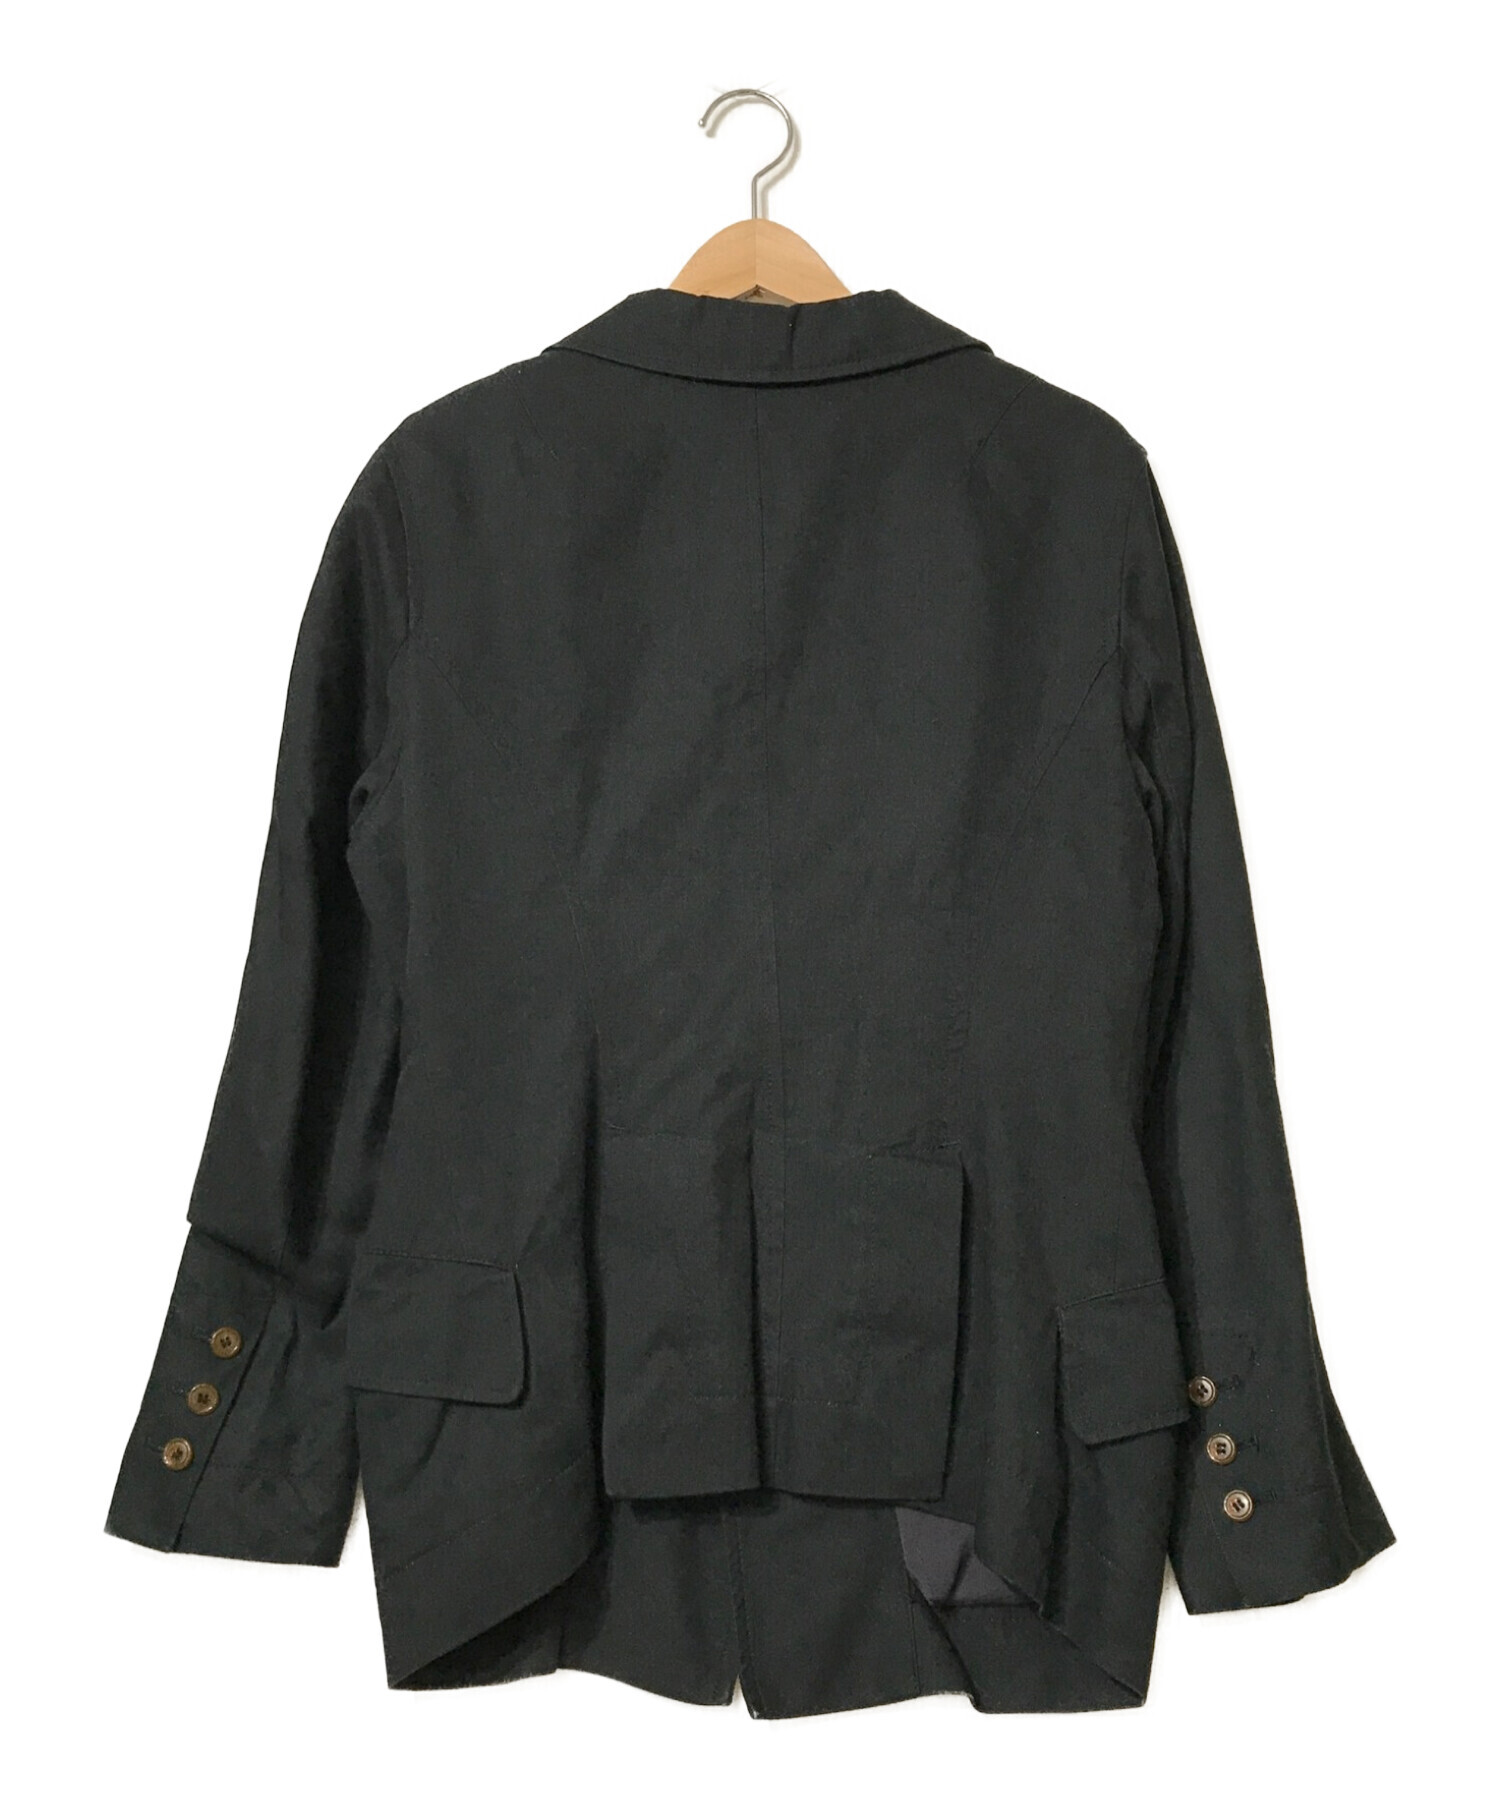 Vivienne Westwood man (ヴィヴィアン ウェストウッド マン) 変形テーラードジャケット ブラック サイズ:44